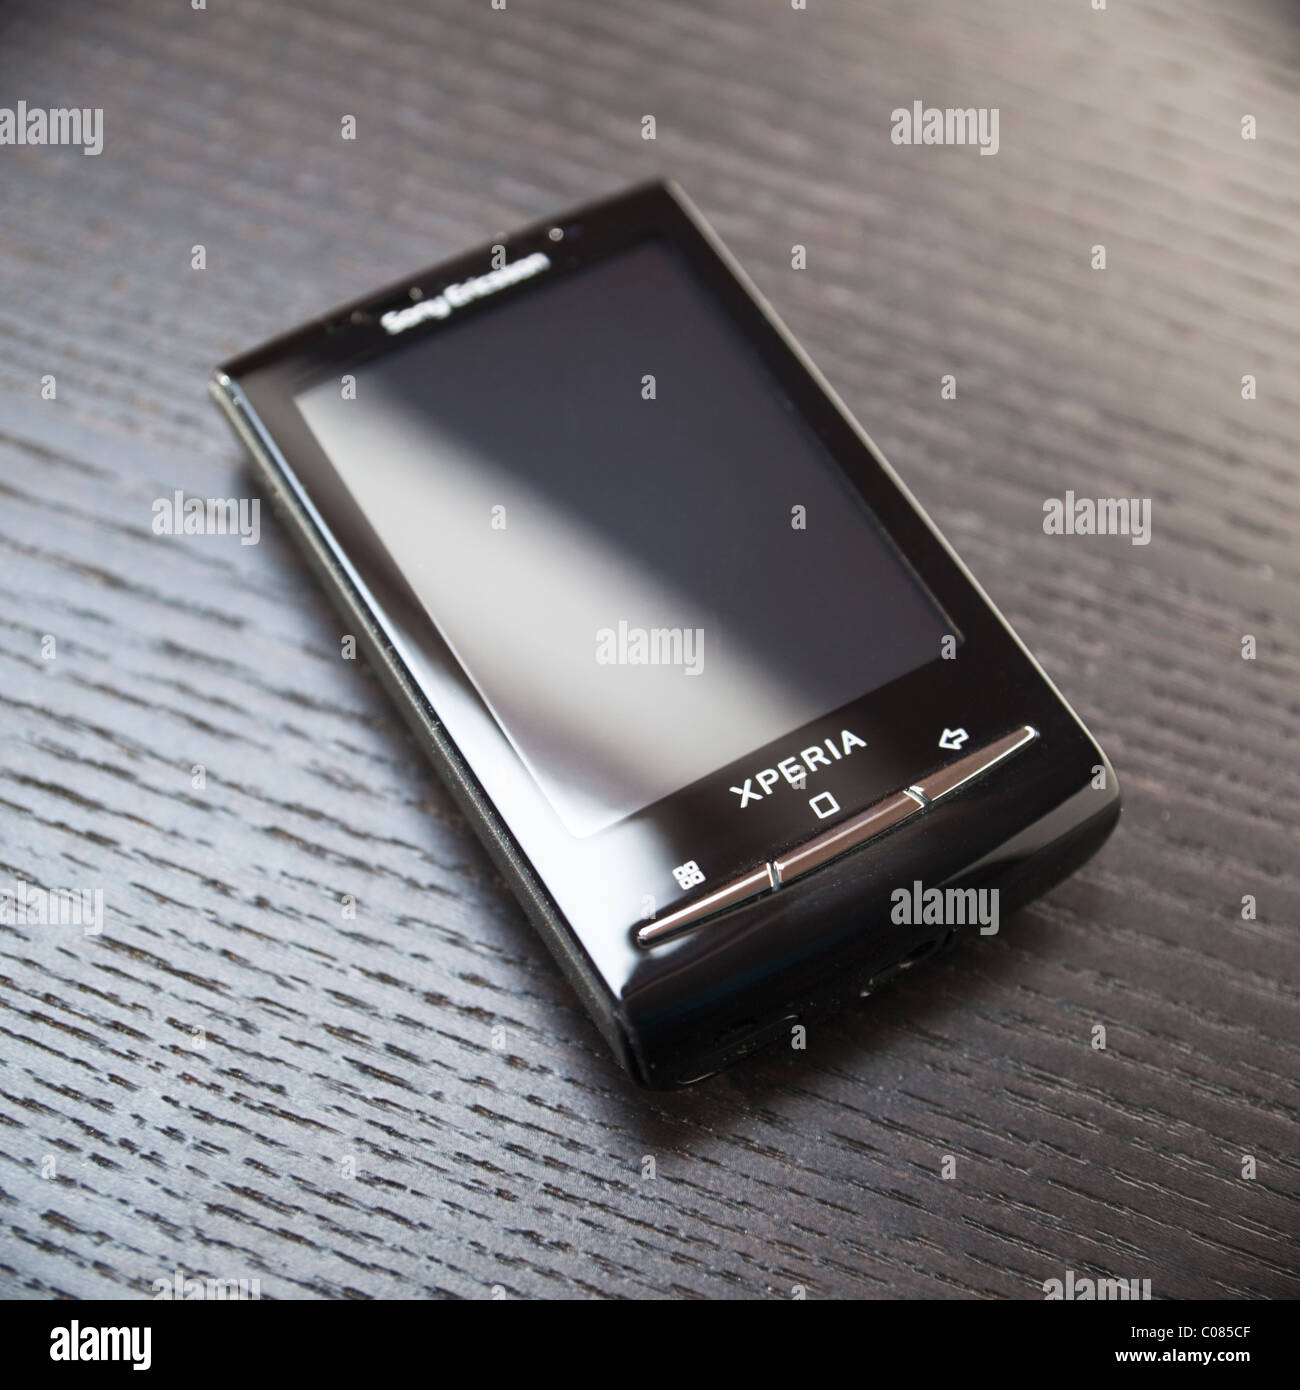 Android - Sony Ericsson Xperia mini Photo -